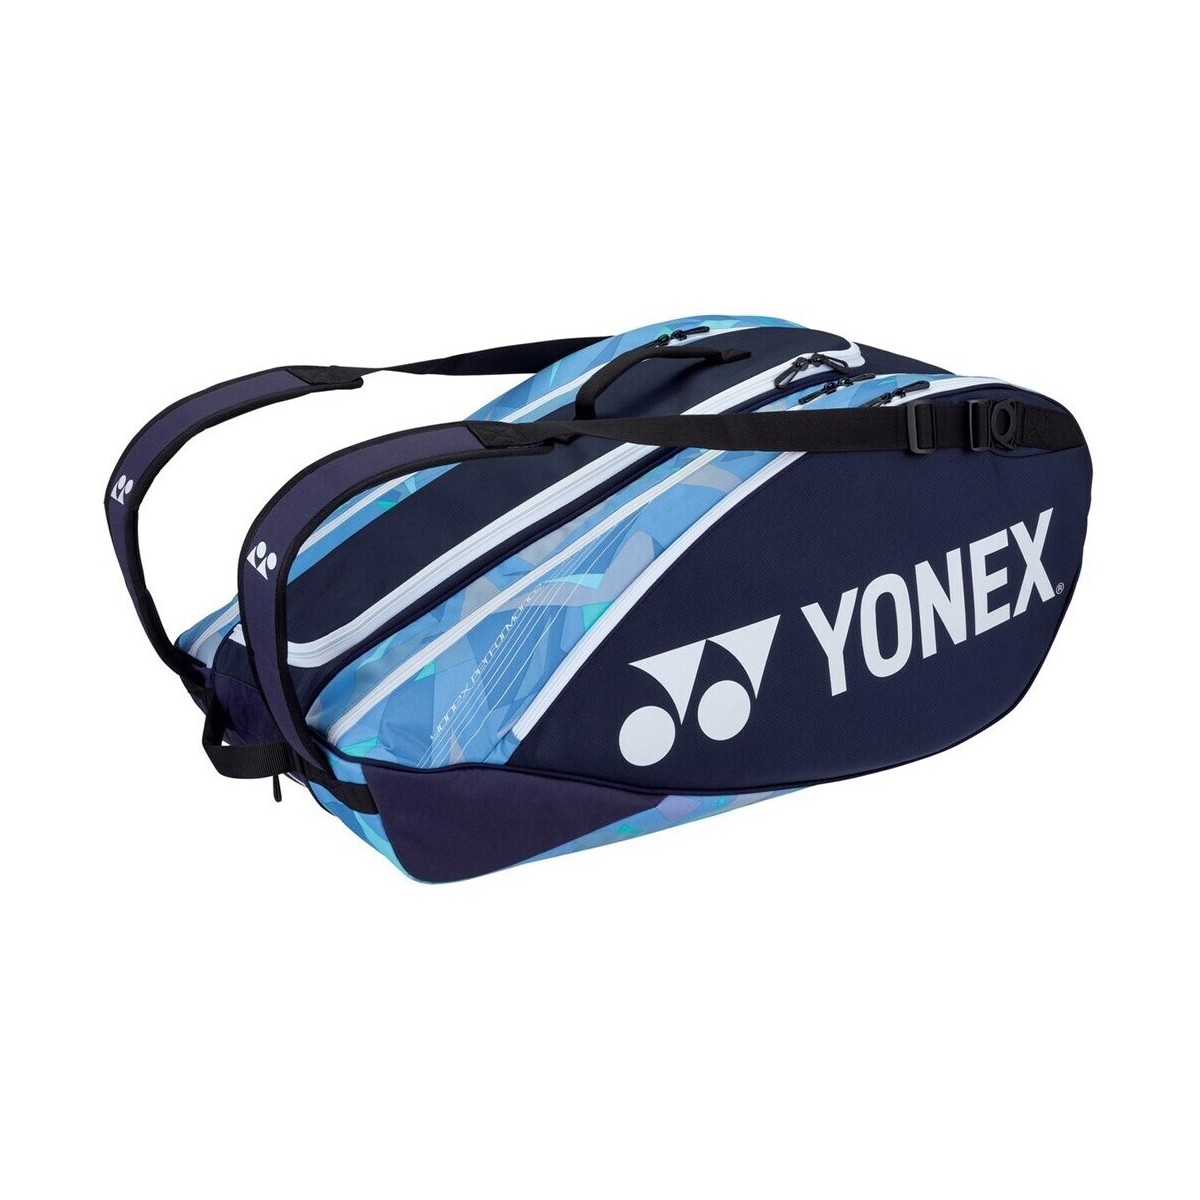 Taška Tašky Yonex Thermobag 92229 Pro Racket Bag 9R Modré, Tmavomodré